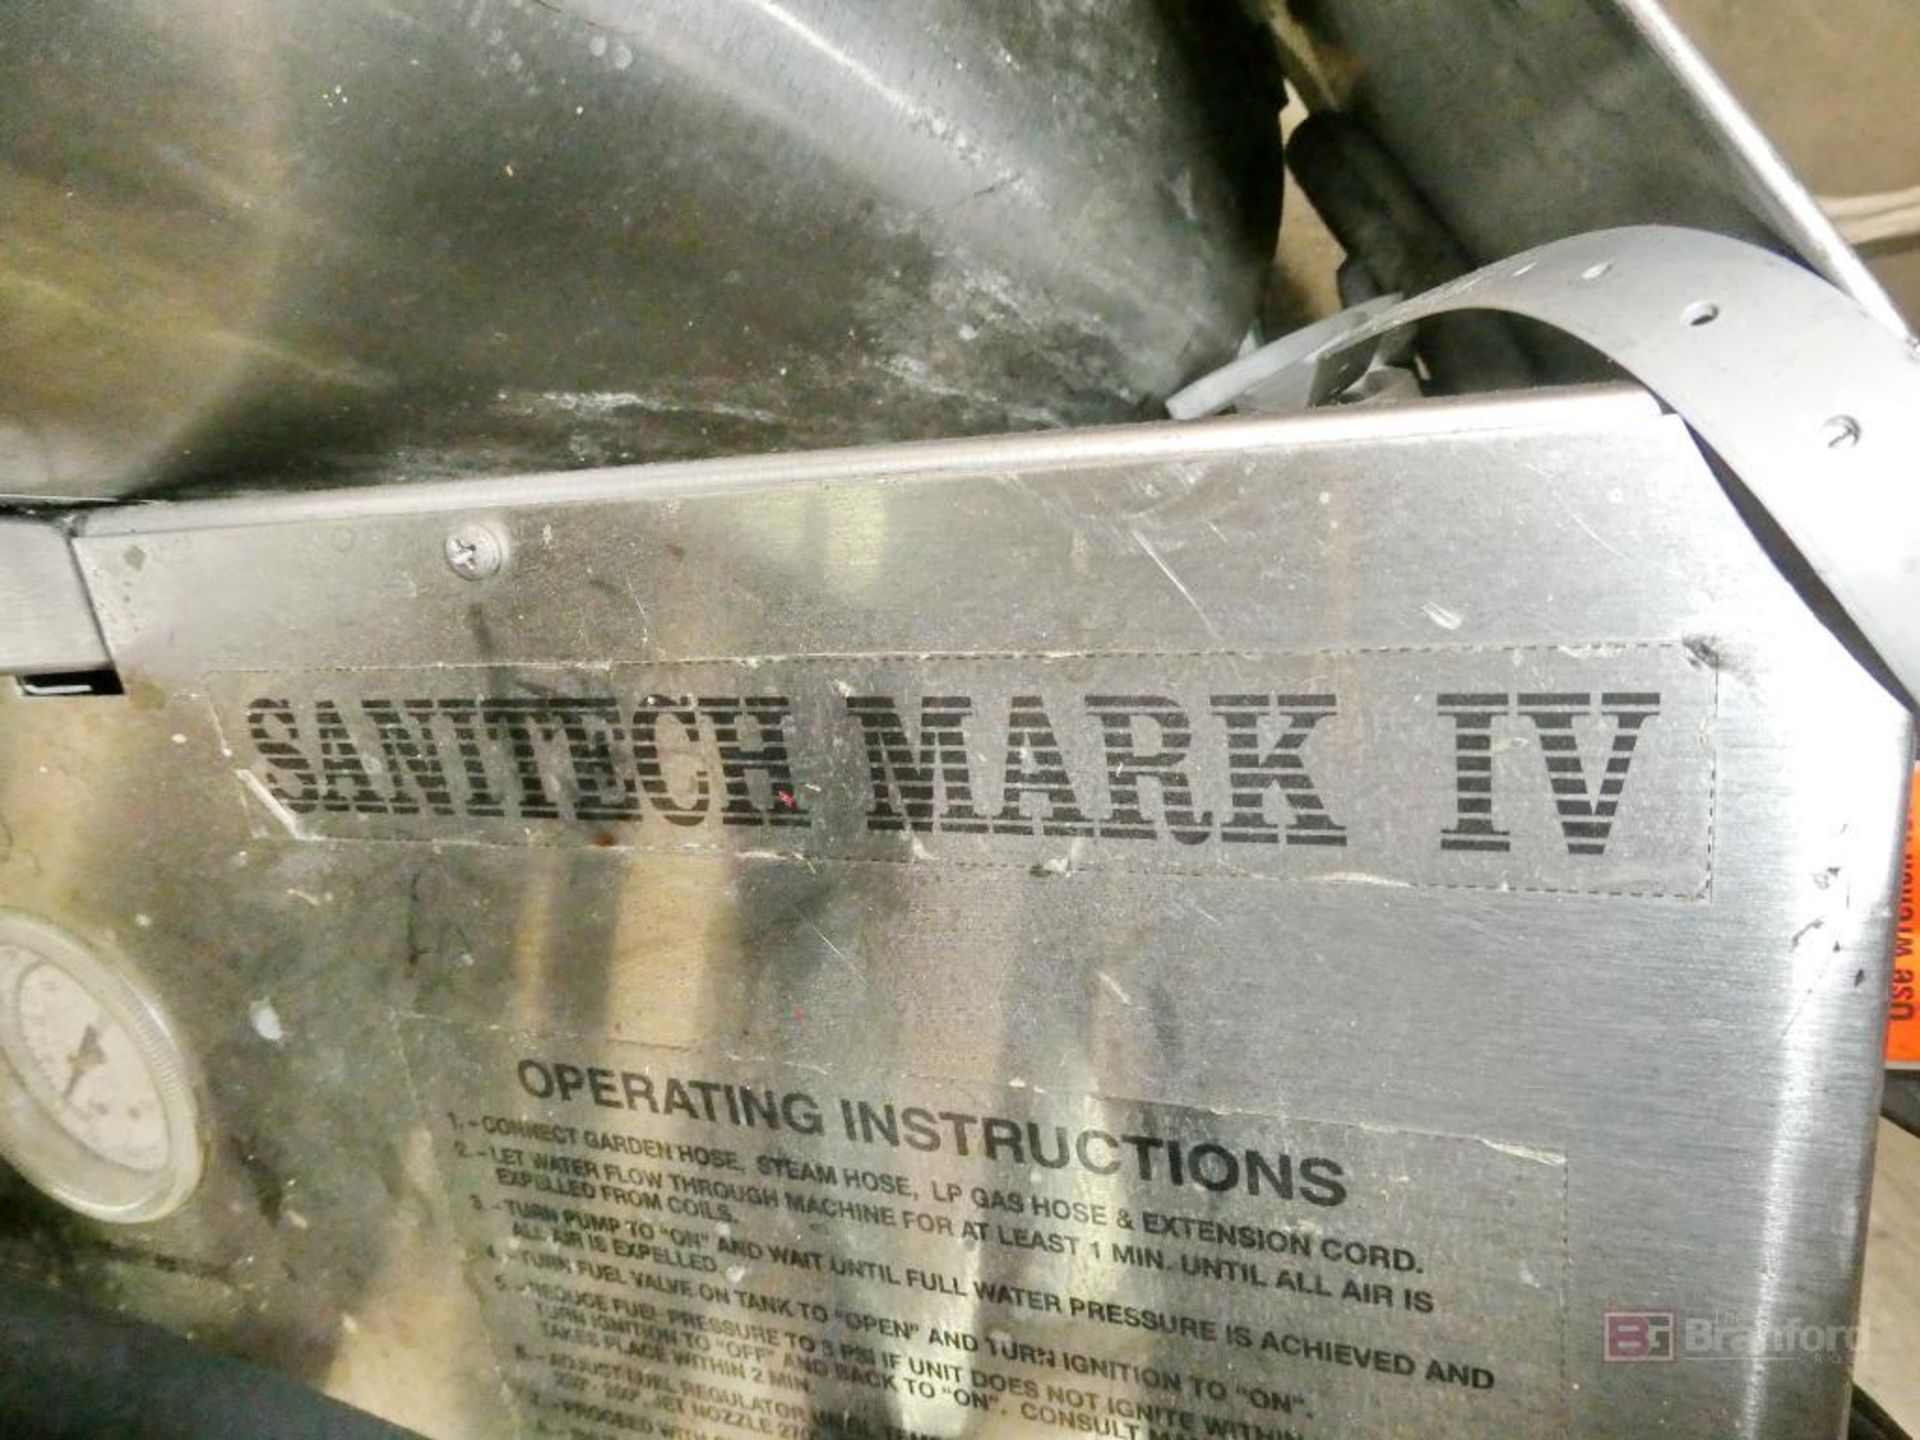 Sanitech Model Mark IV, Stainless Steel Portable Steam Pressure Washer - Image 3 of 3